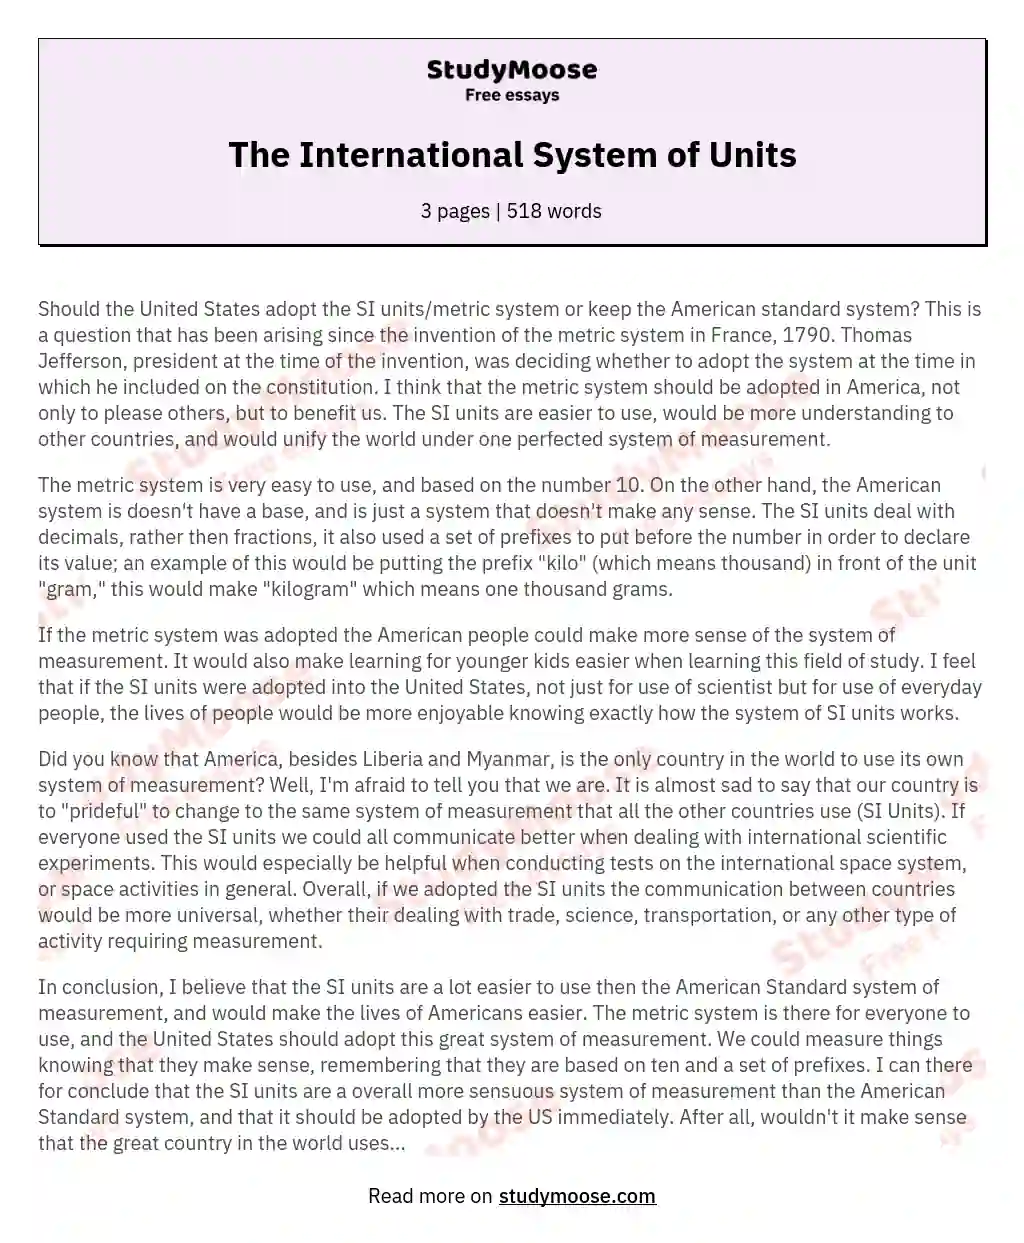 The International System of Units essay